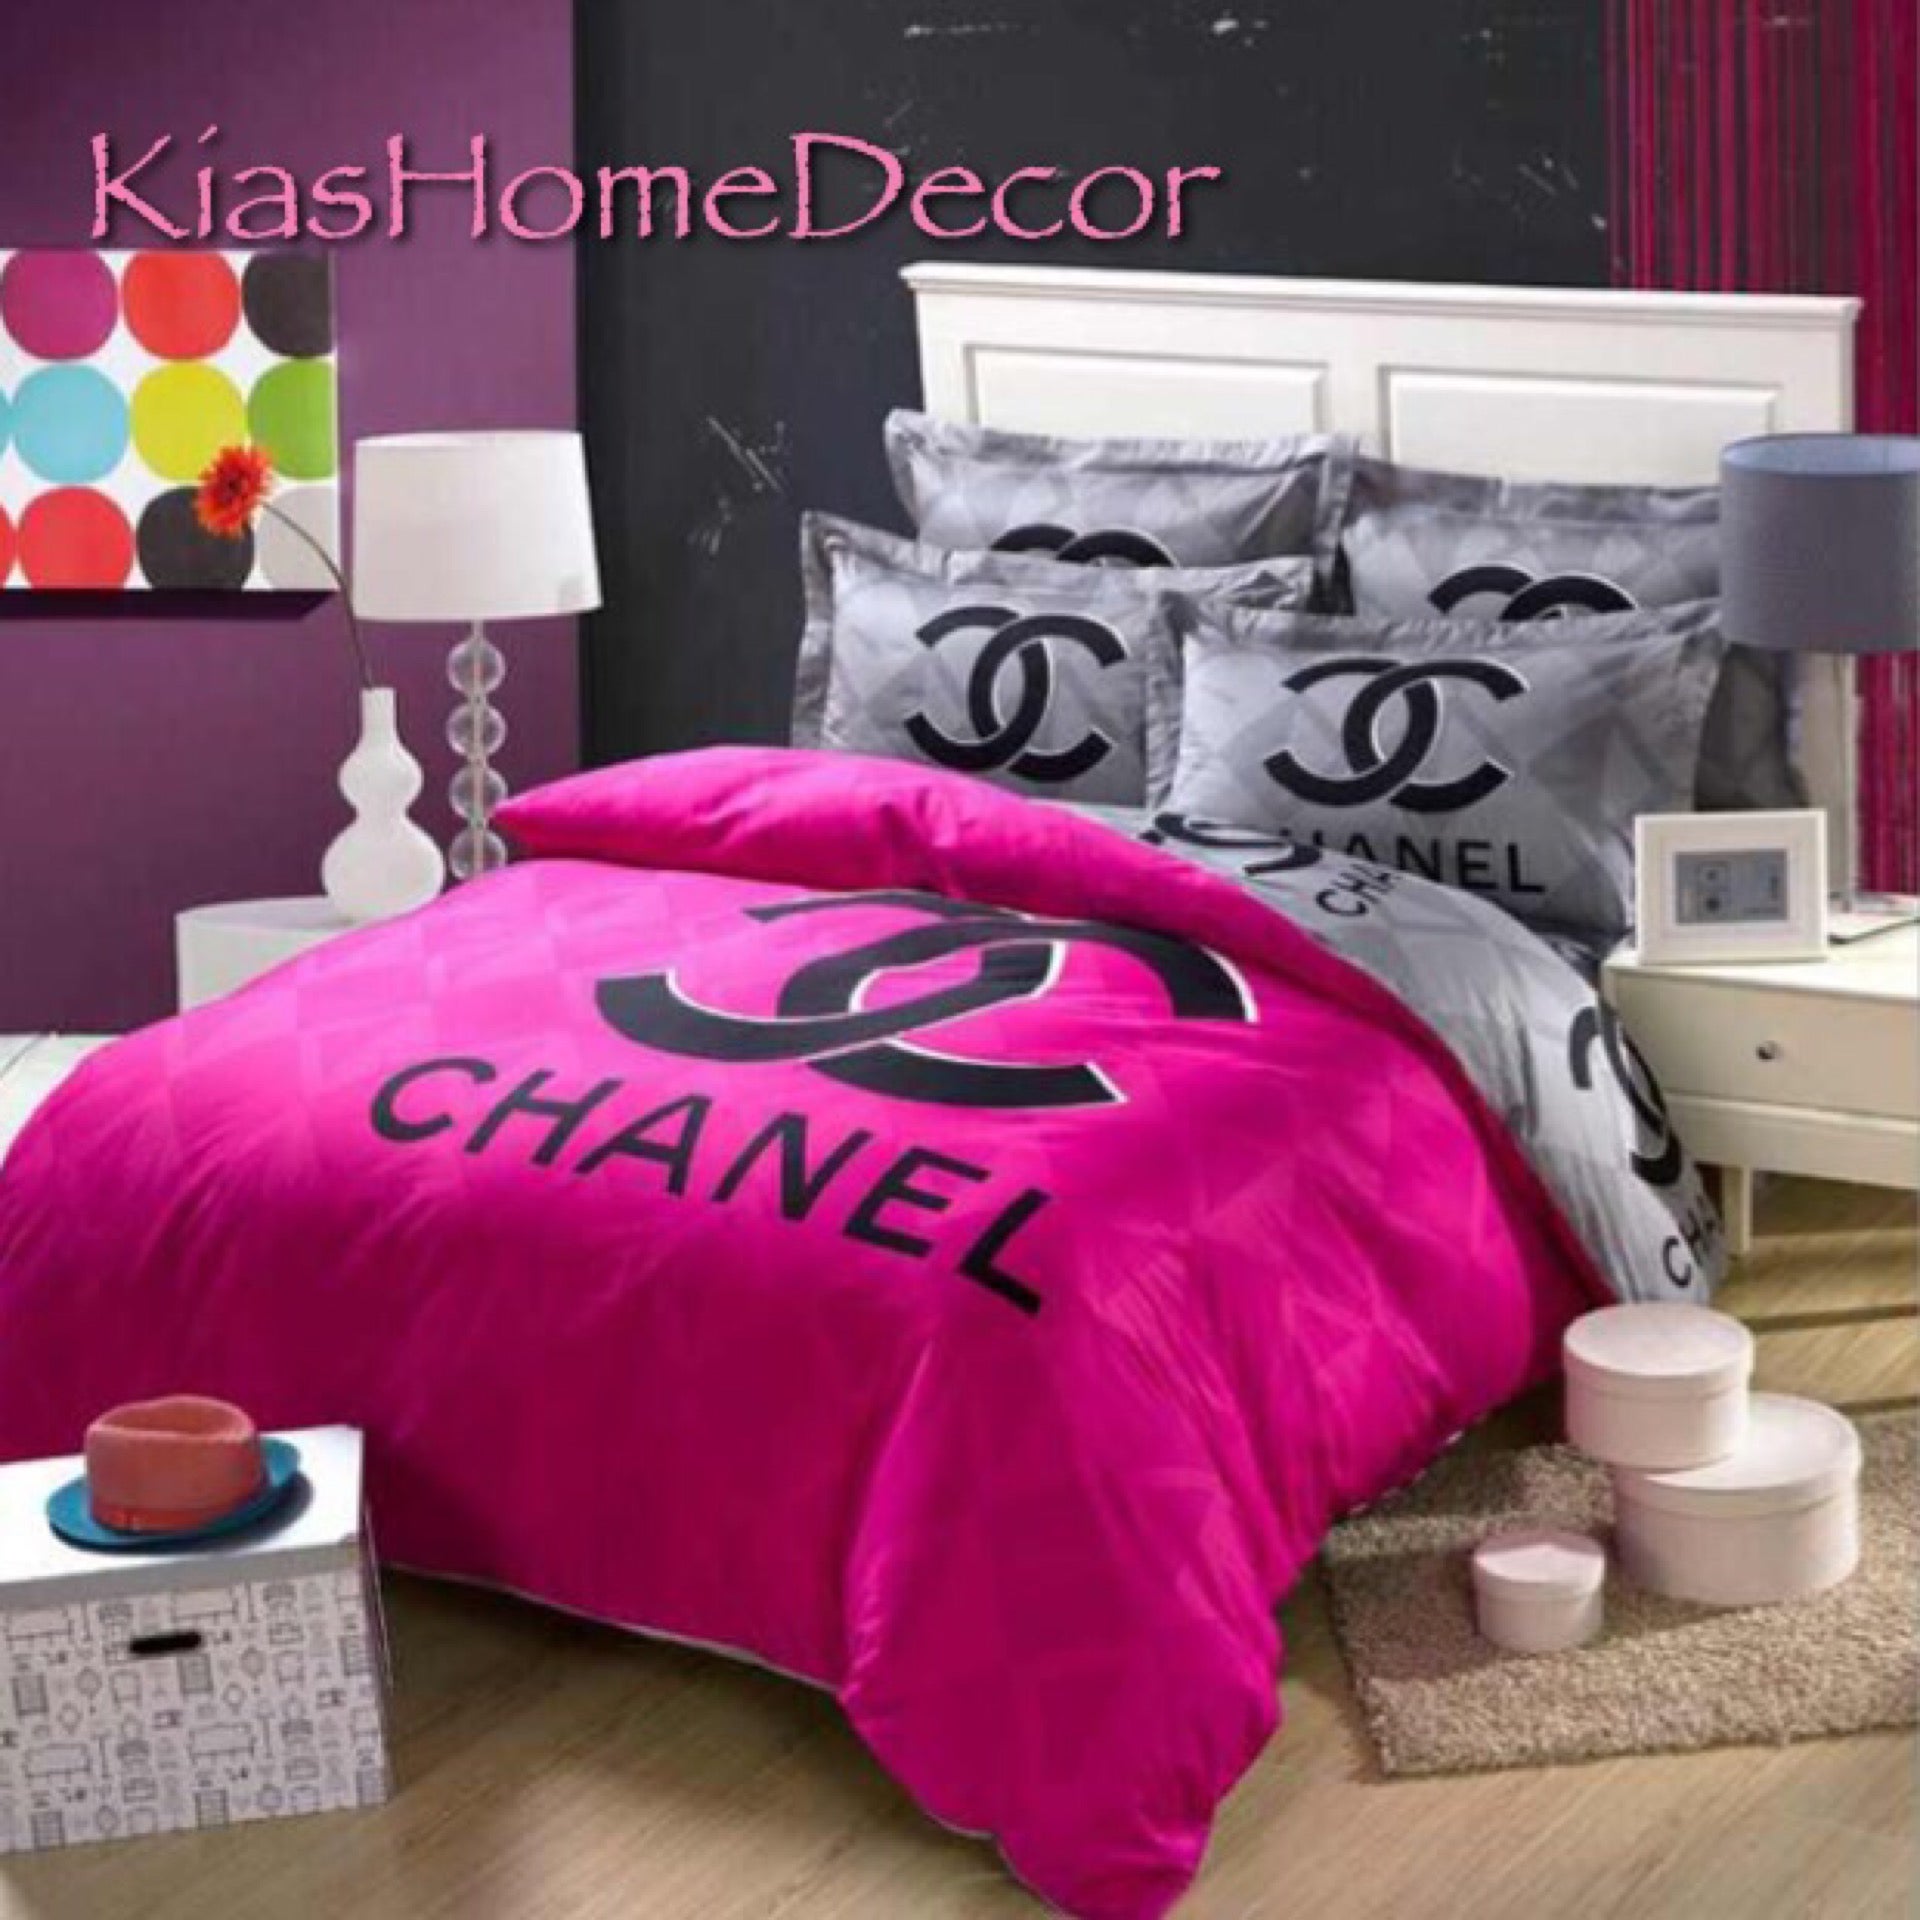 pink chanel bed set